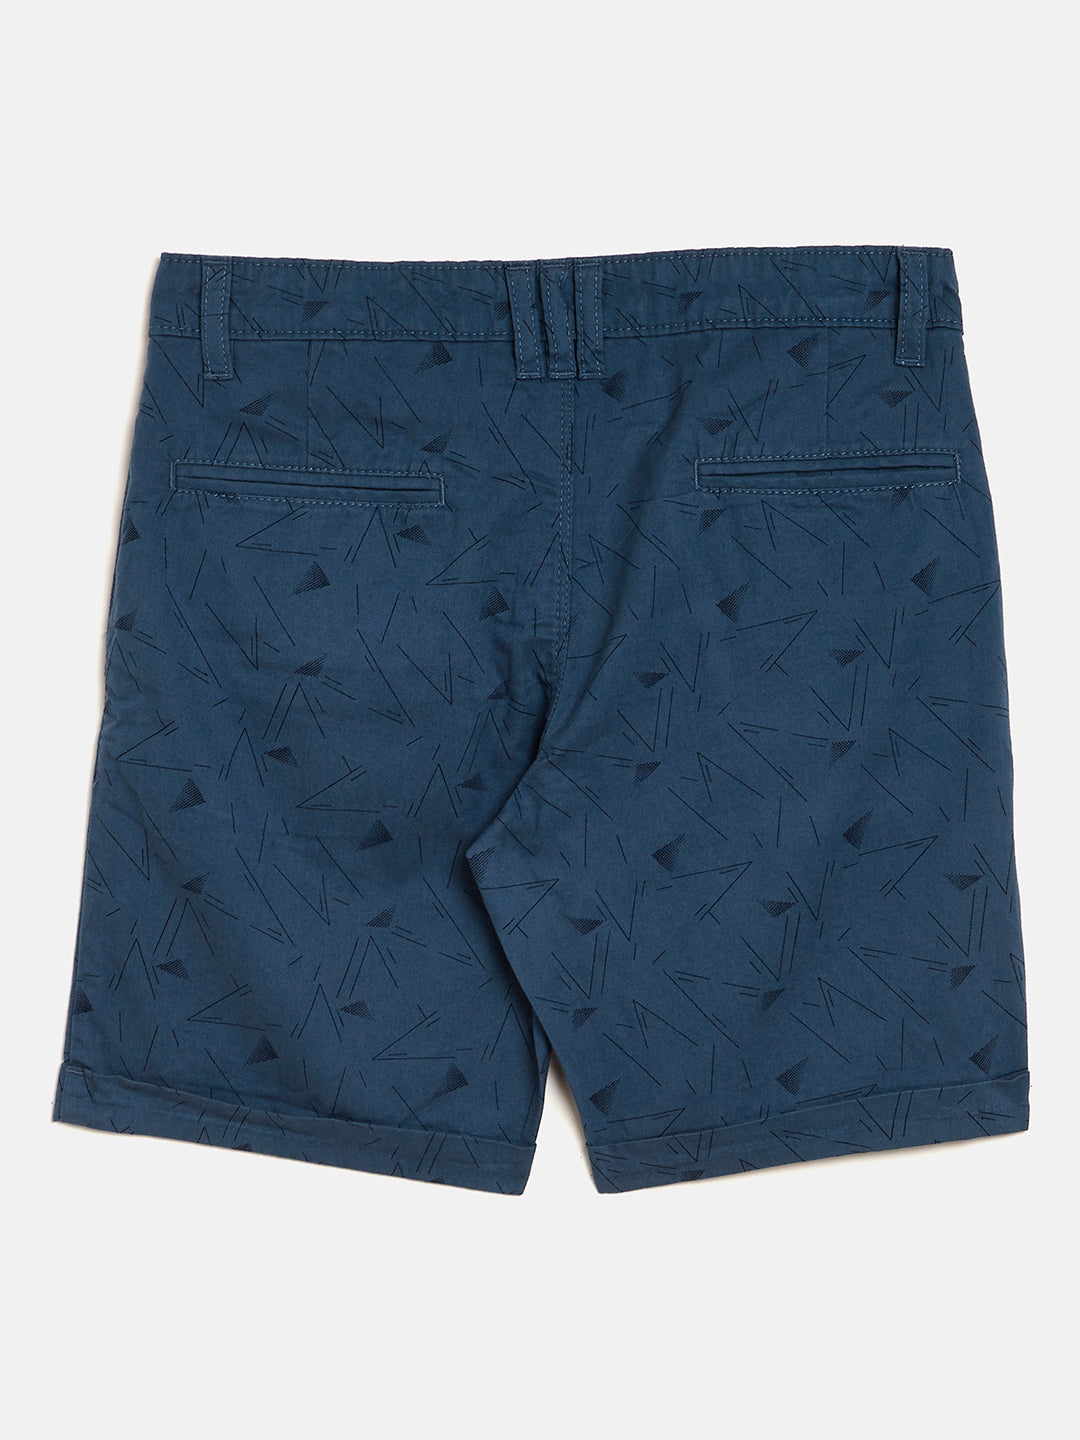 Blue Printed Slim Fit Shorts - Boys Shorts